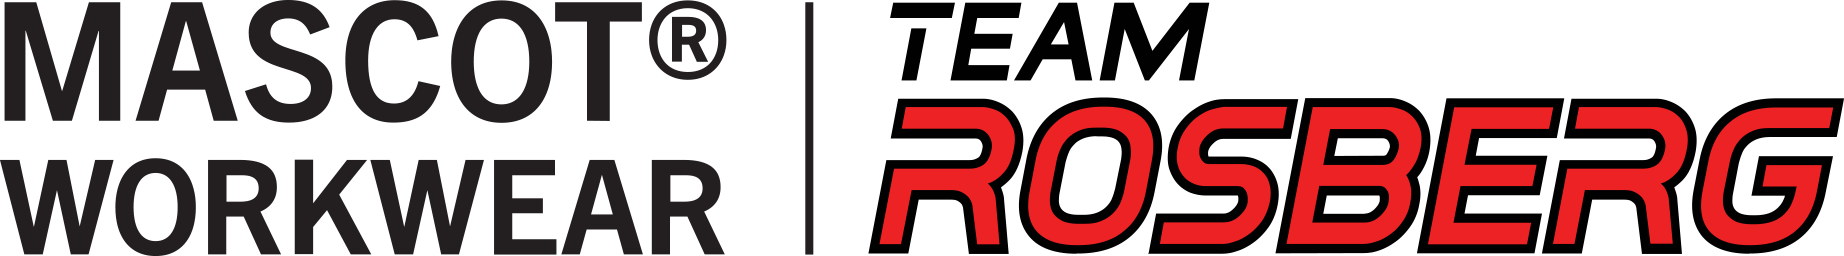 Team Rosberg | MASCOT WORKWEAR logo